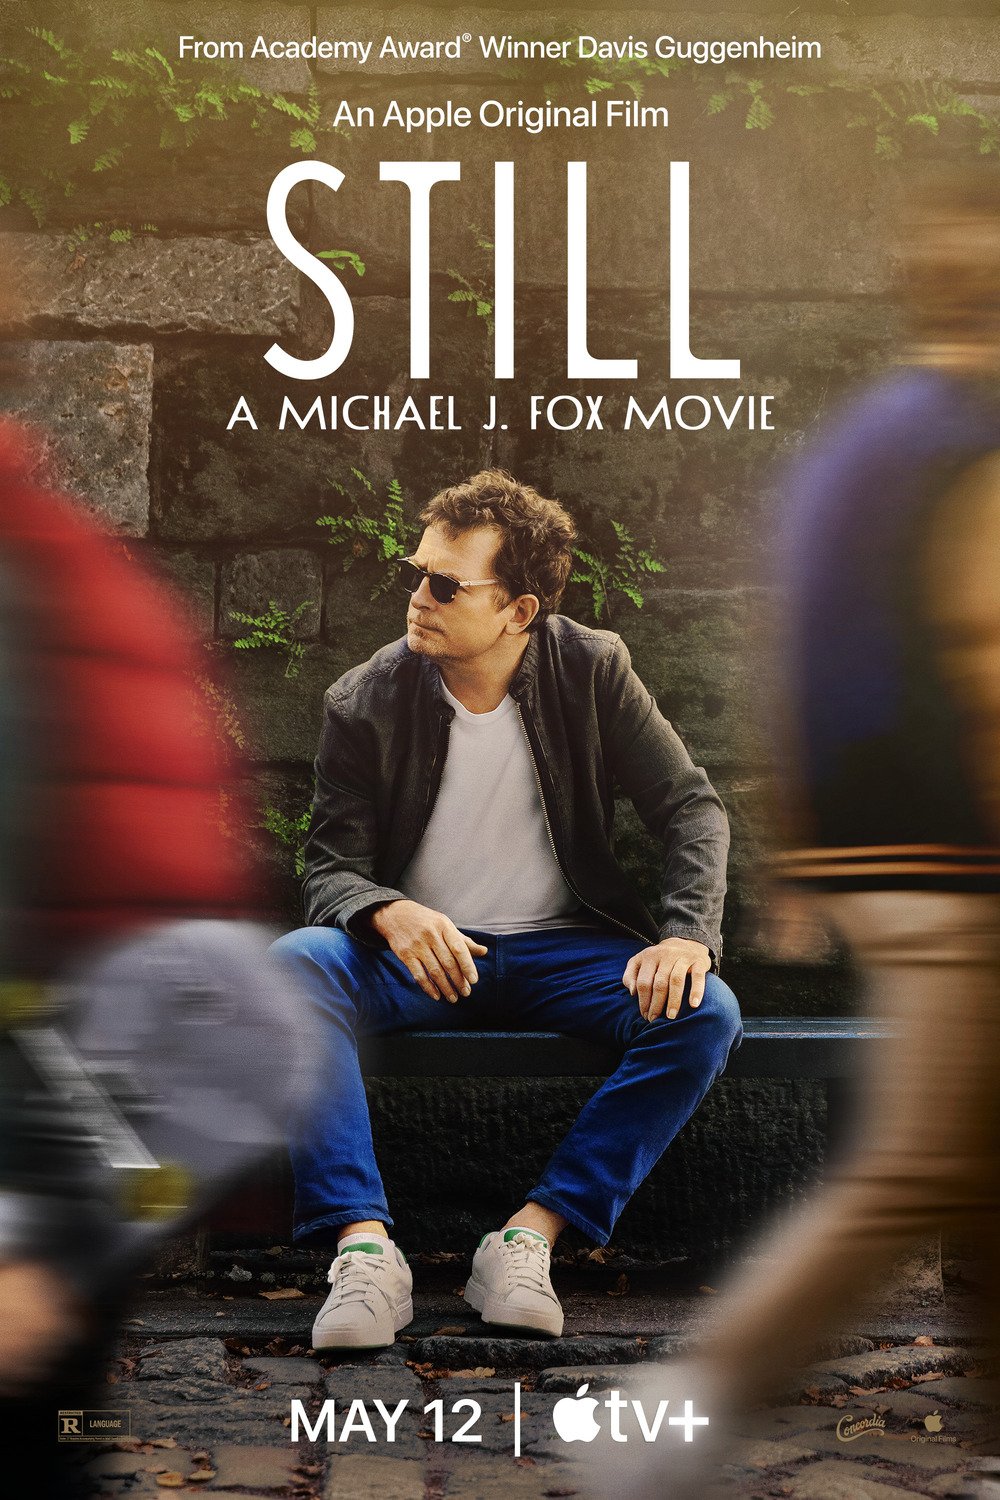 Poster of the movie Still: A Michael J. Fox Movie